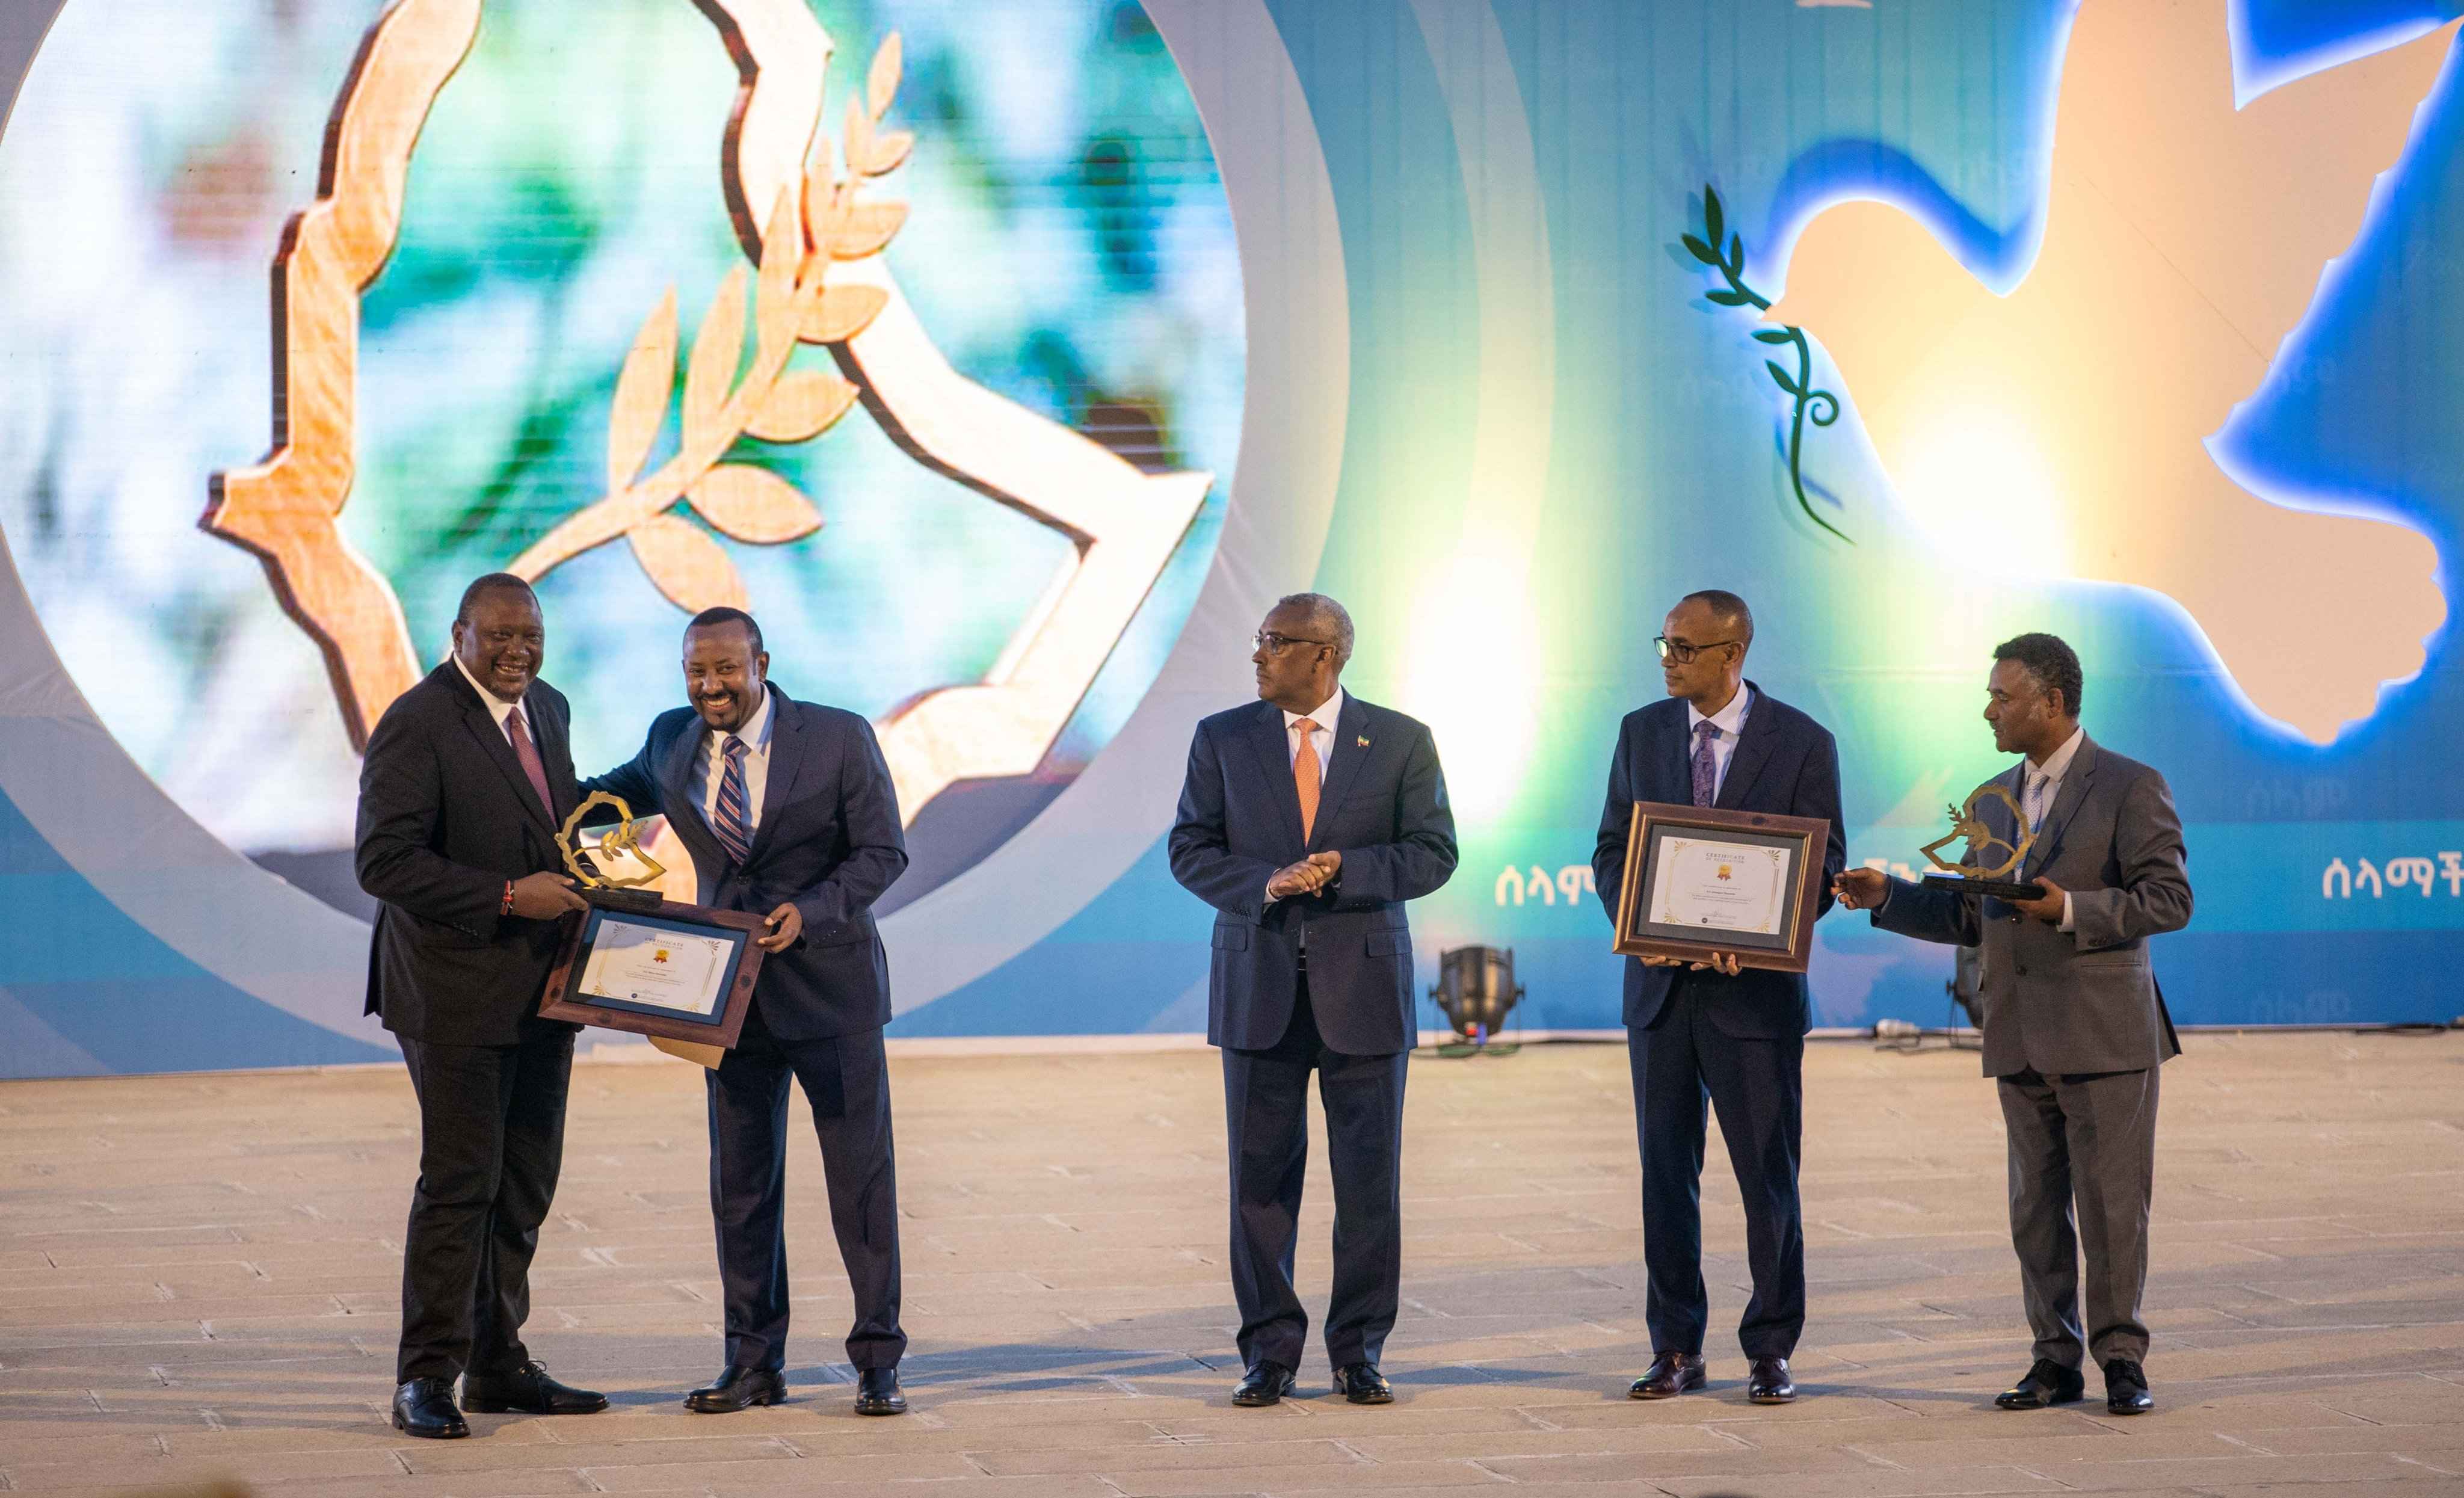 Former President Uhuru Kenyatta awarded for his contribution to the peaceful settlement in Ethiopia.